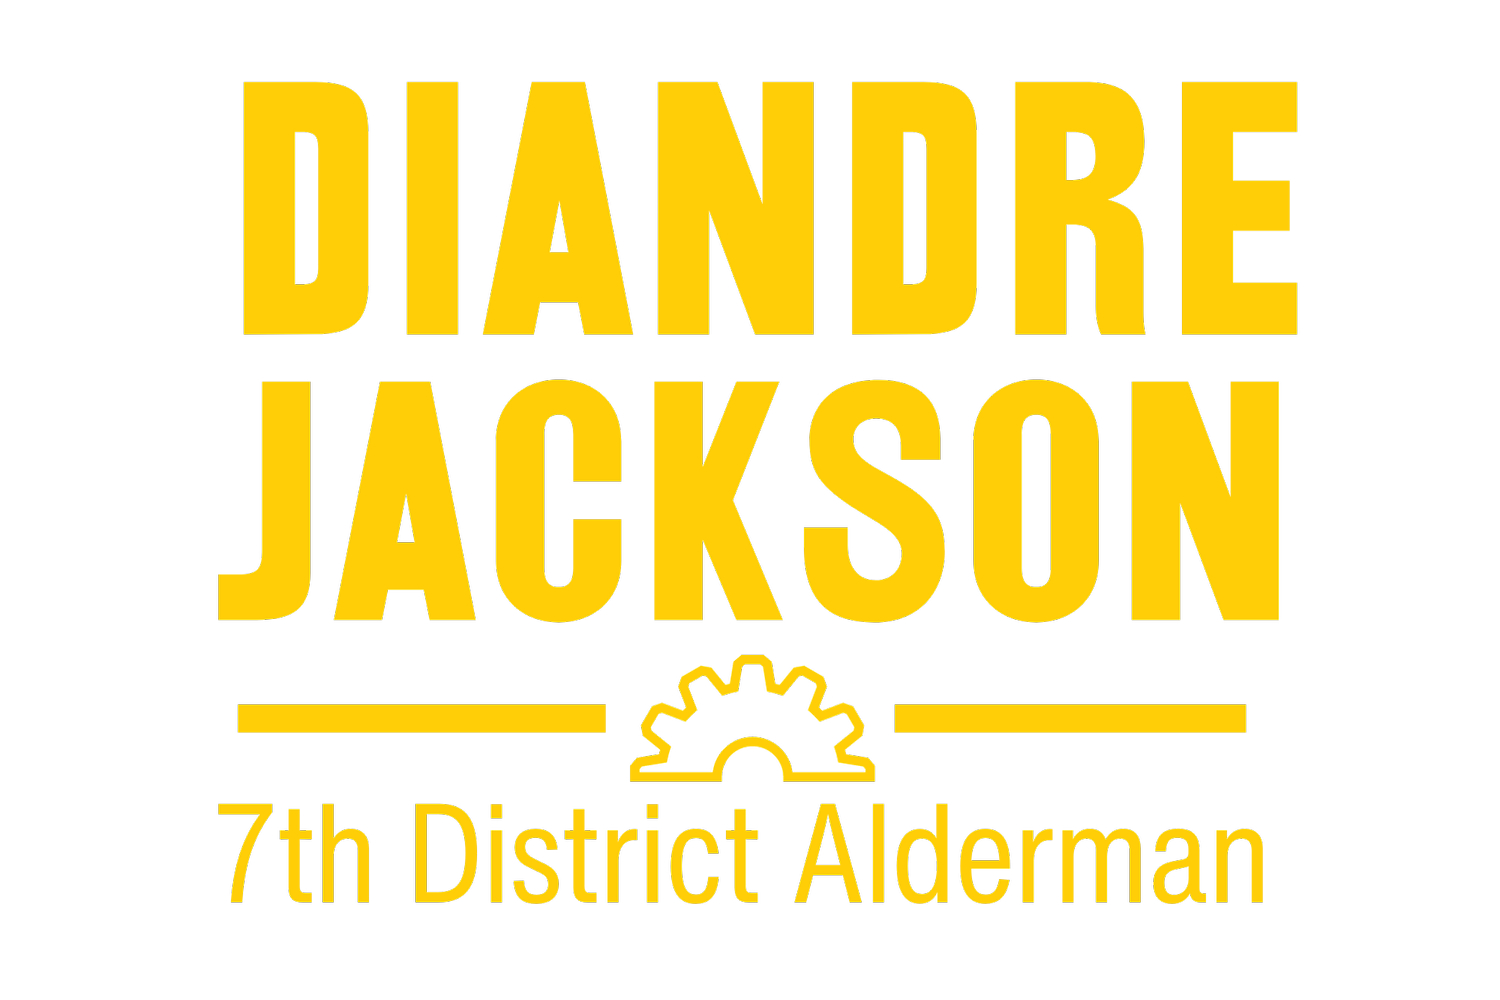 Friends of DiAndre Jackson